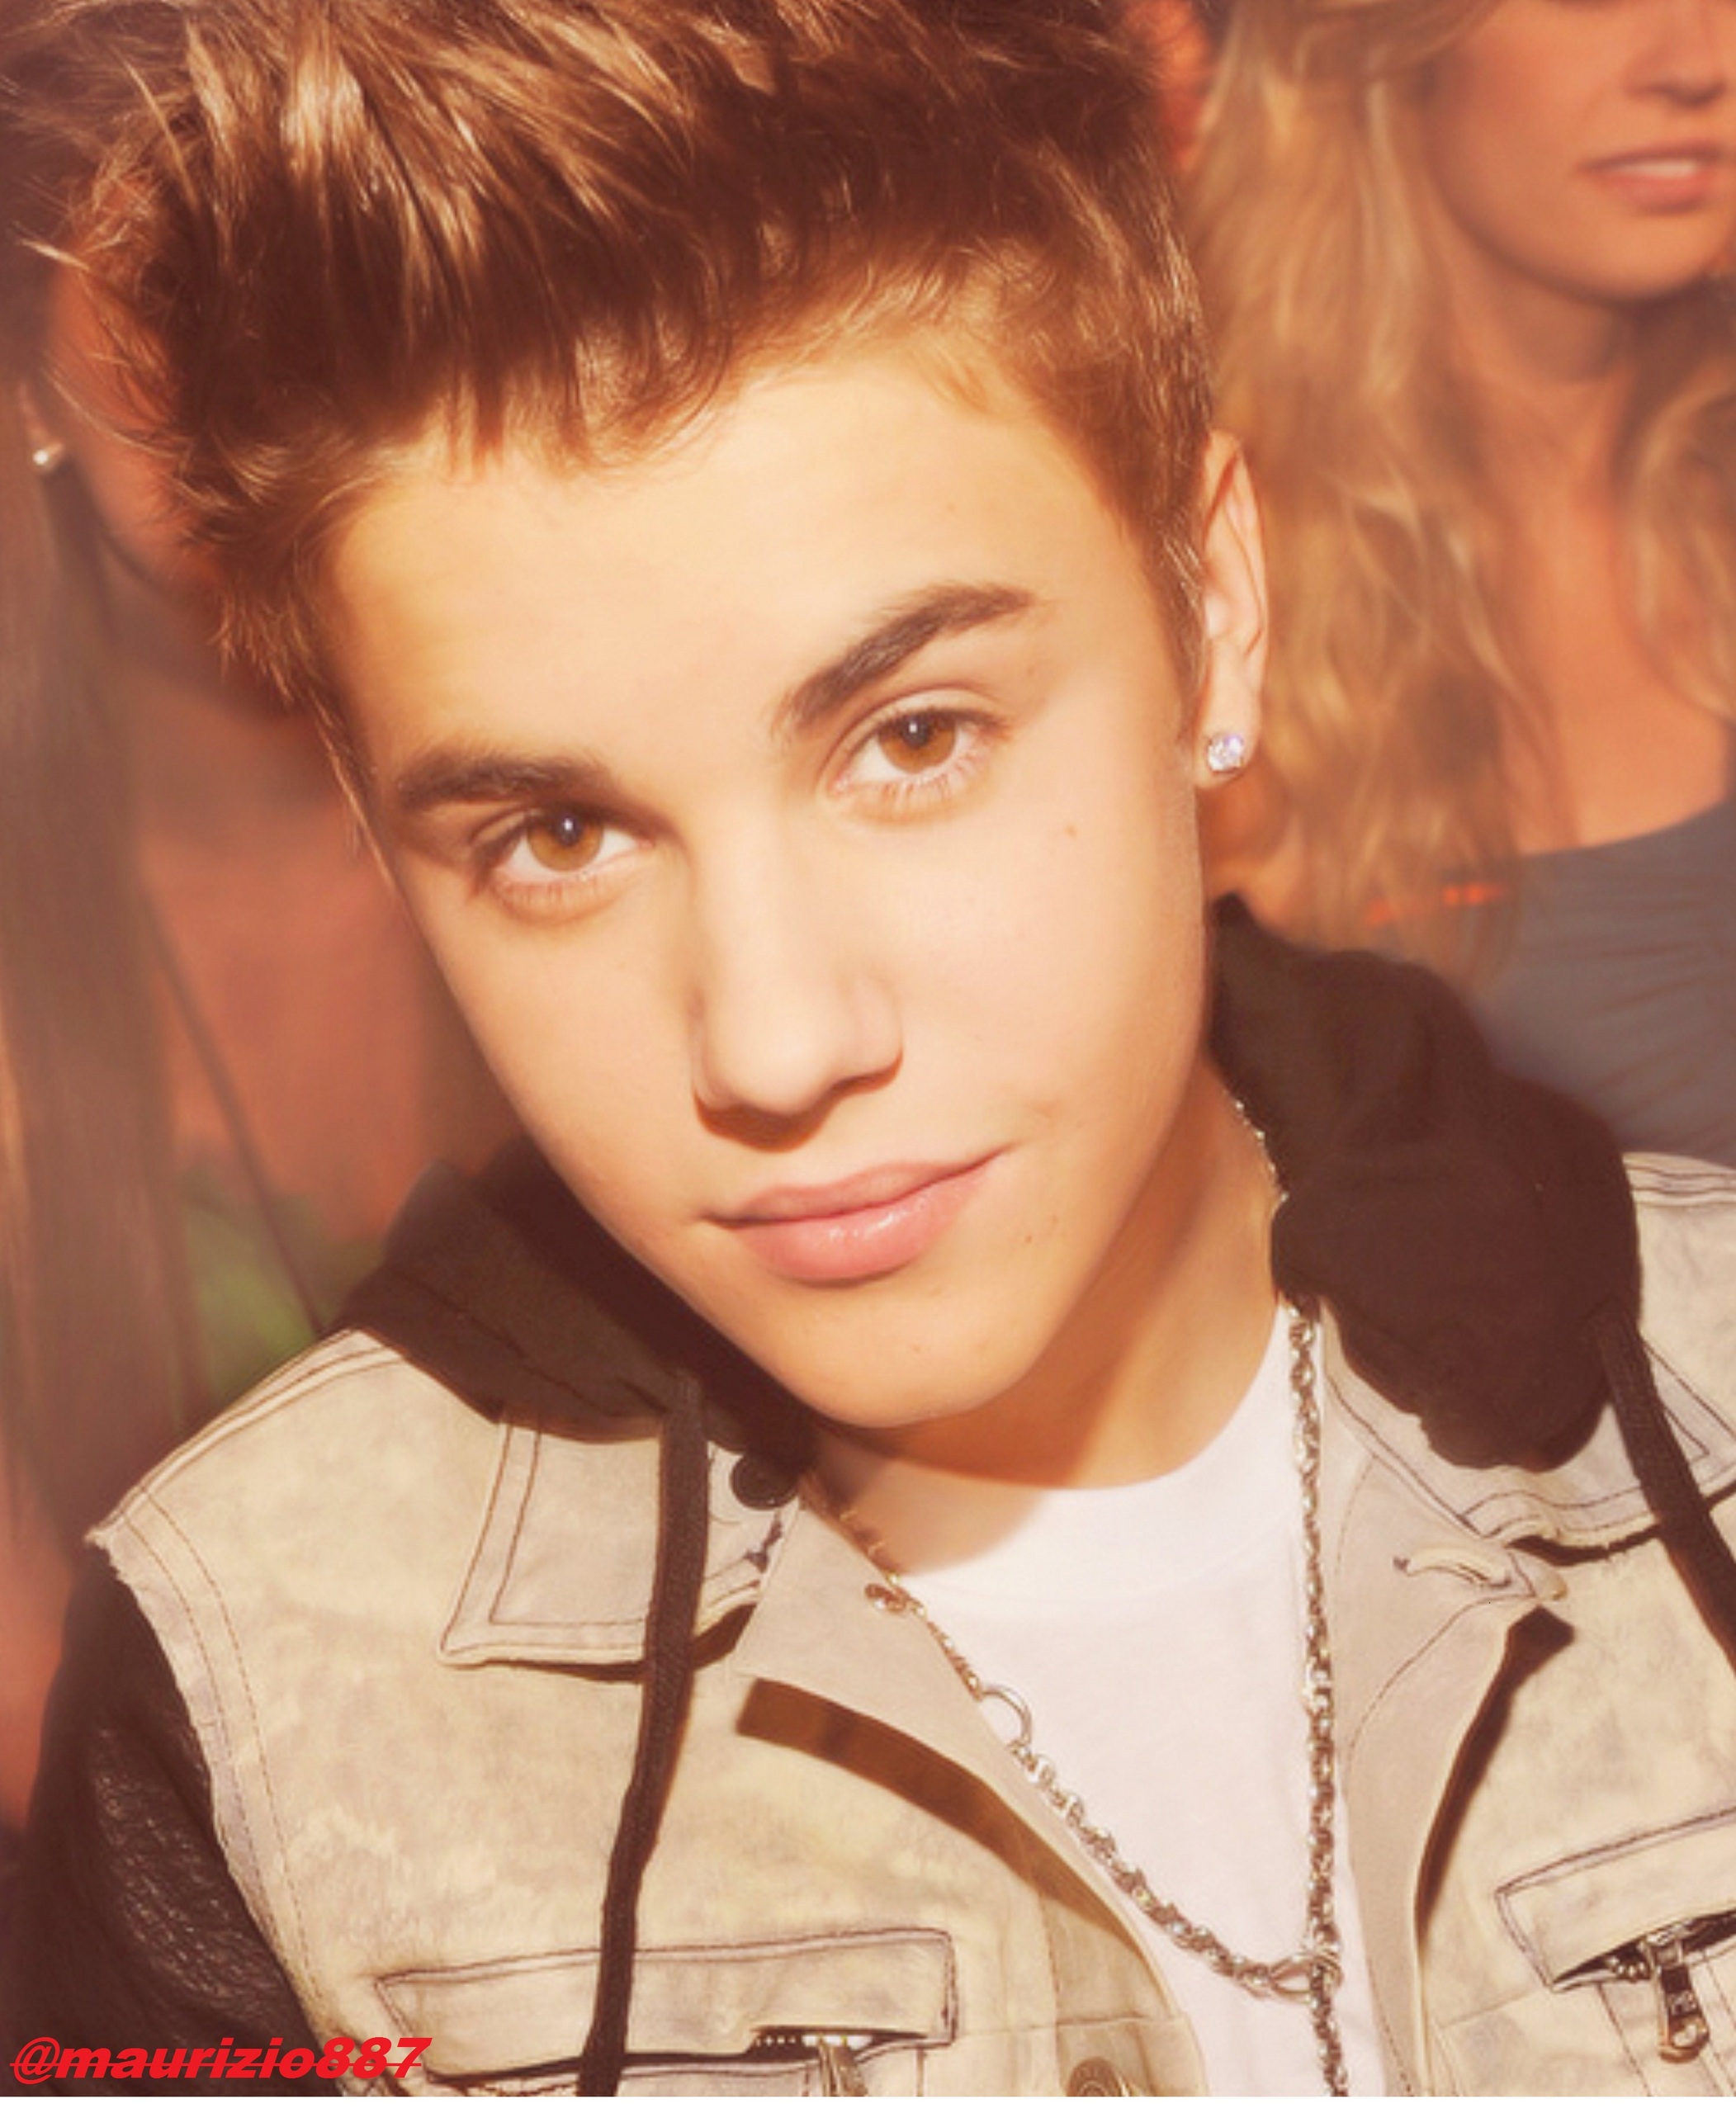 justin bieber, damn sexy! - Justin Bieber Photo (30909314) - Fanpop